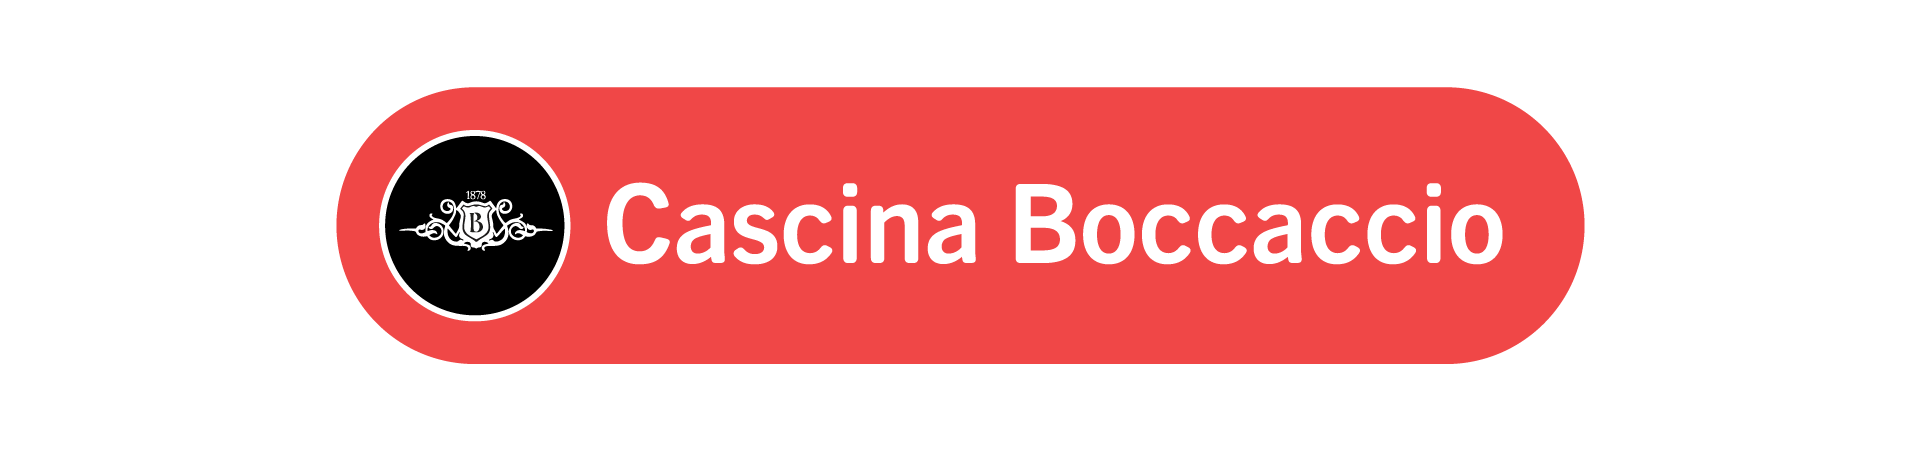 Cascina Boccaccio - Organic Beer